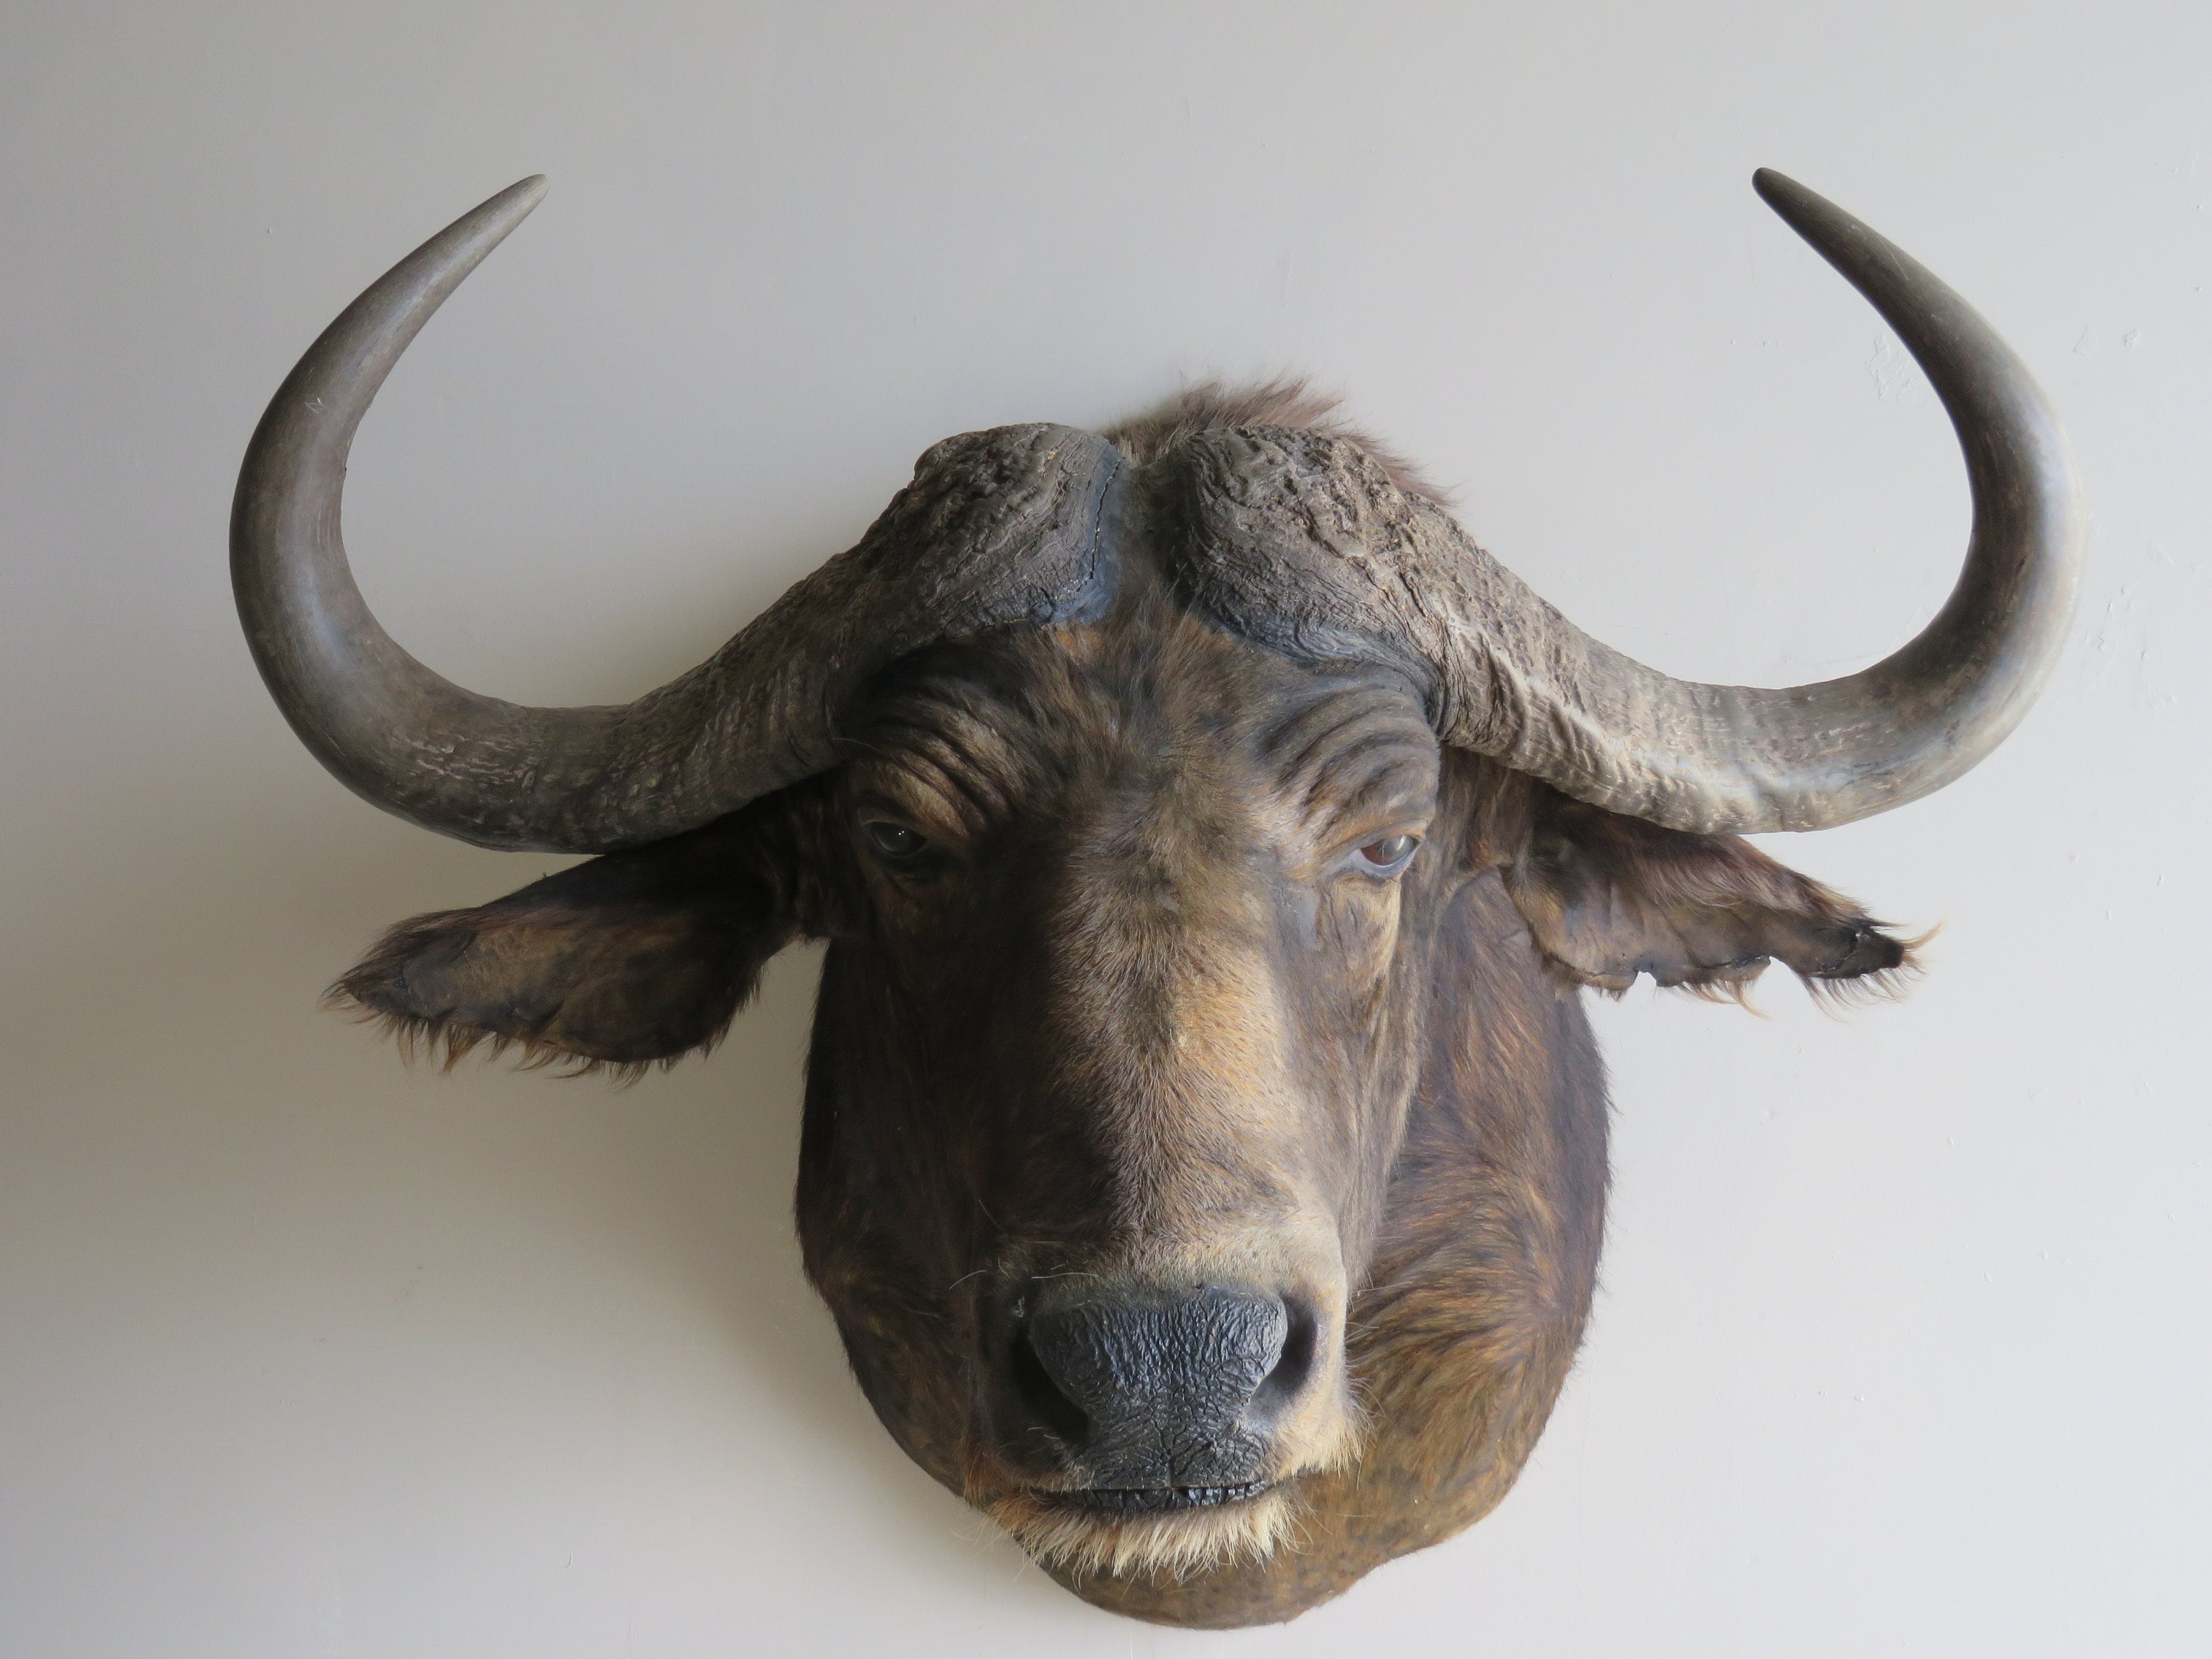 Cape Buffalo for Sale. | Etsy